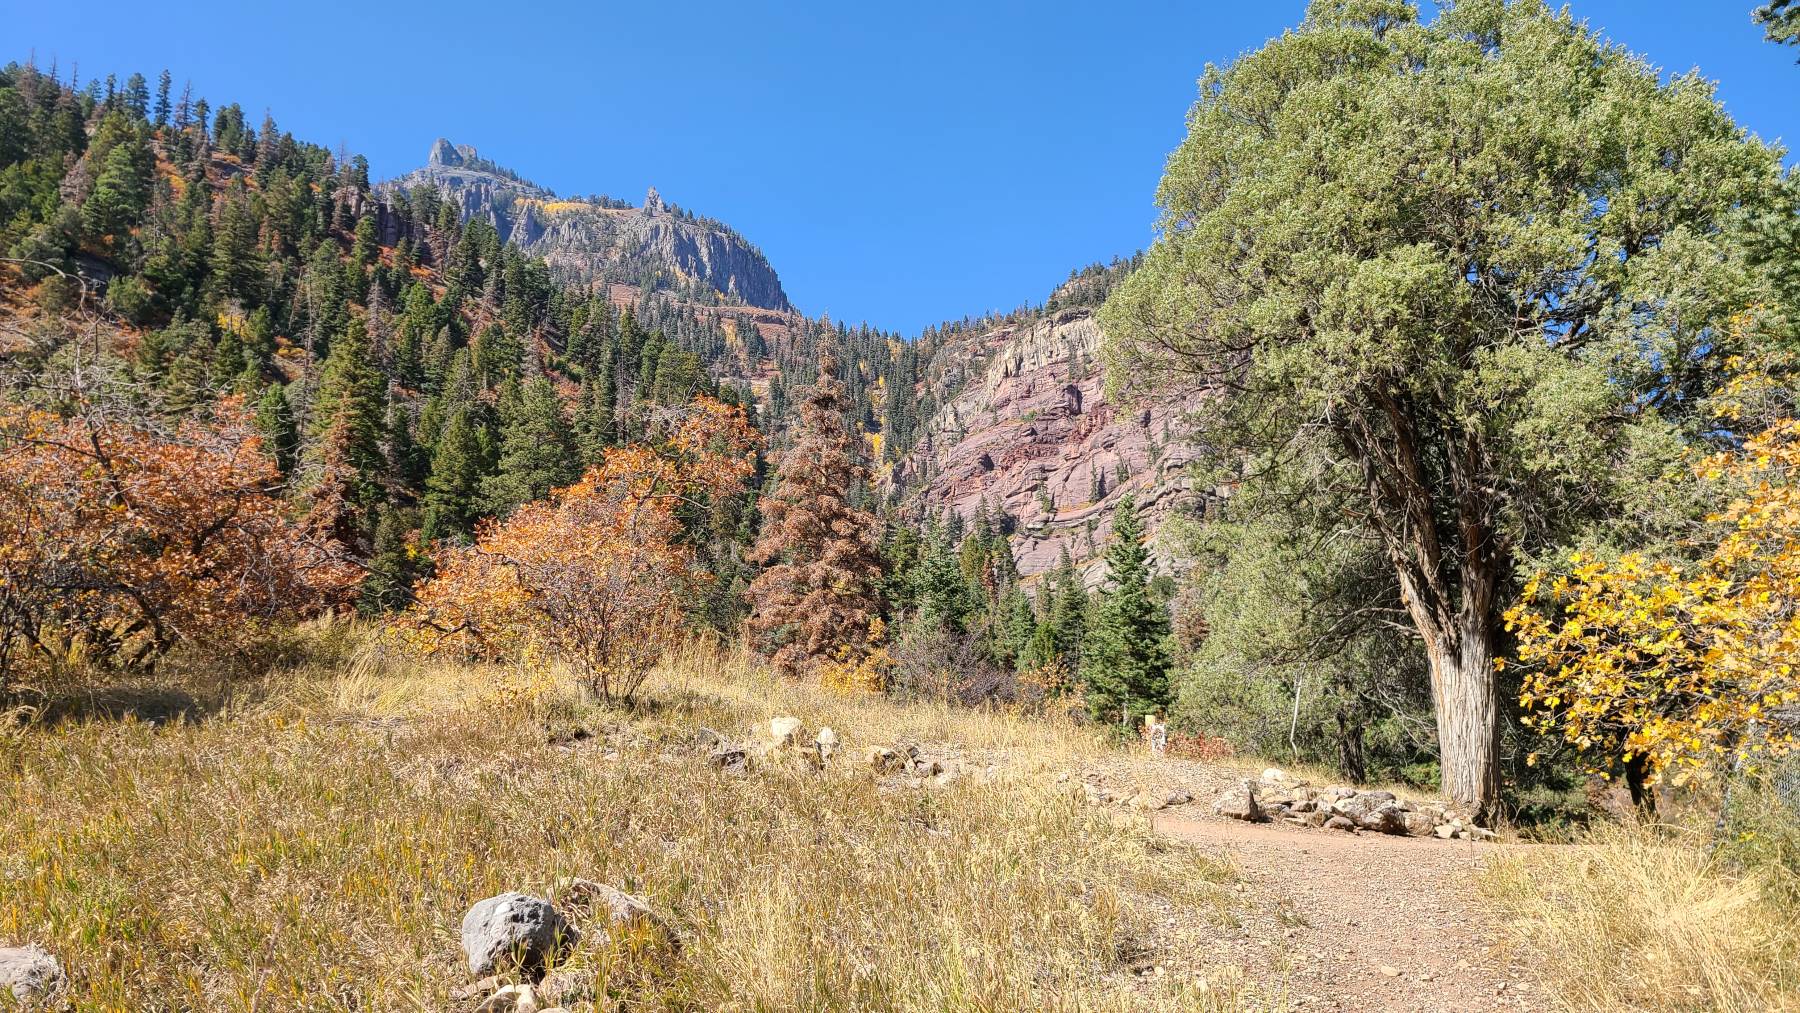 Hiking uphill near Ouray Colorado